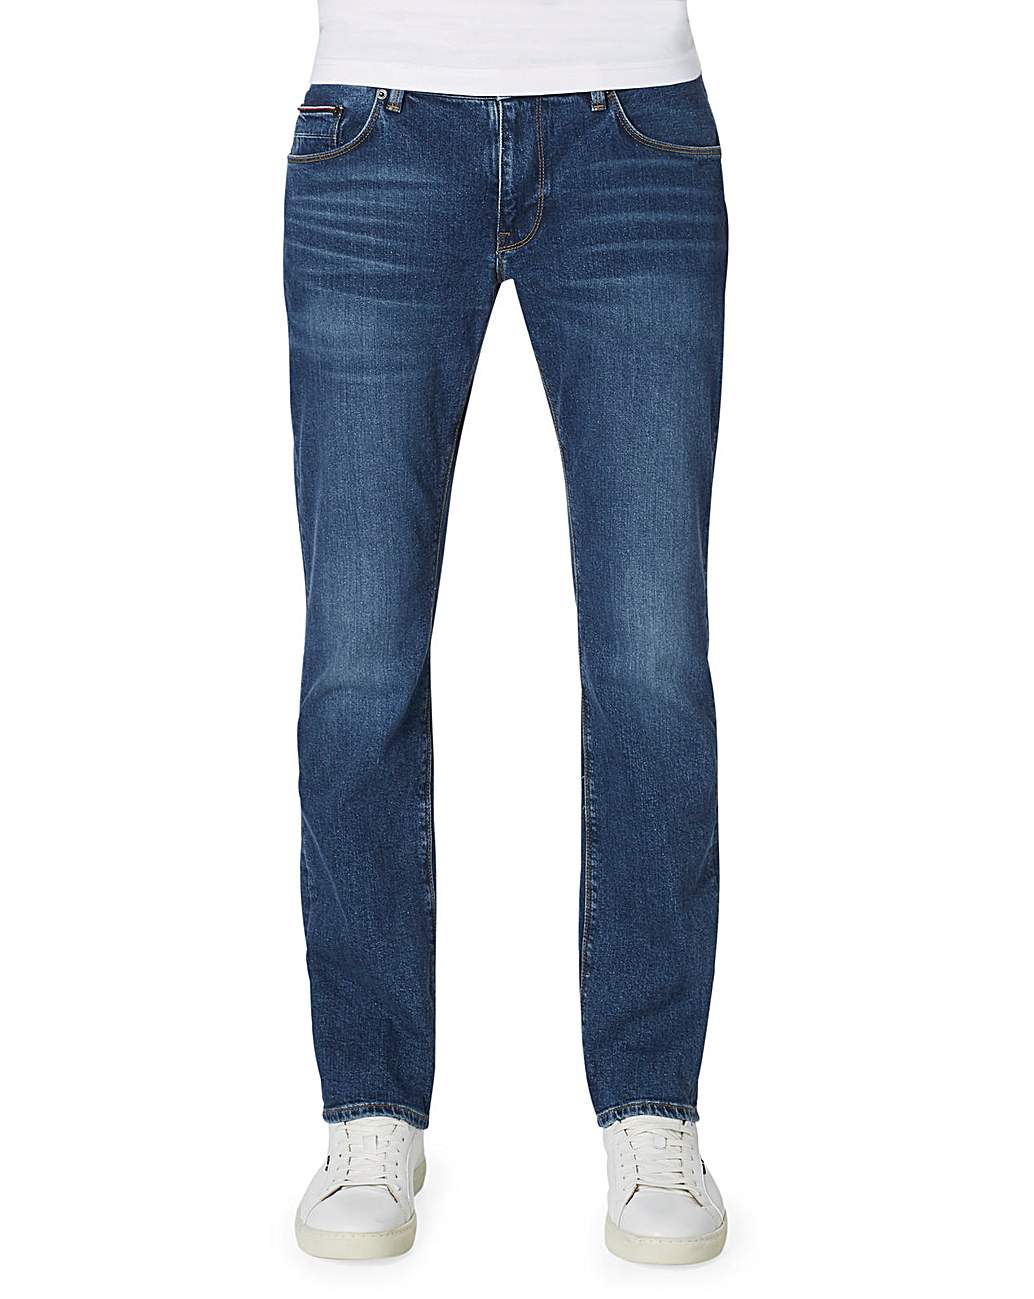 hilfiger madison jeans